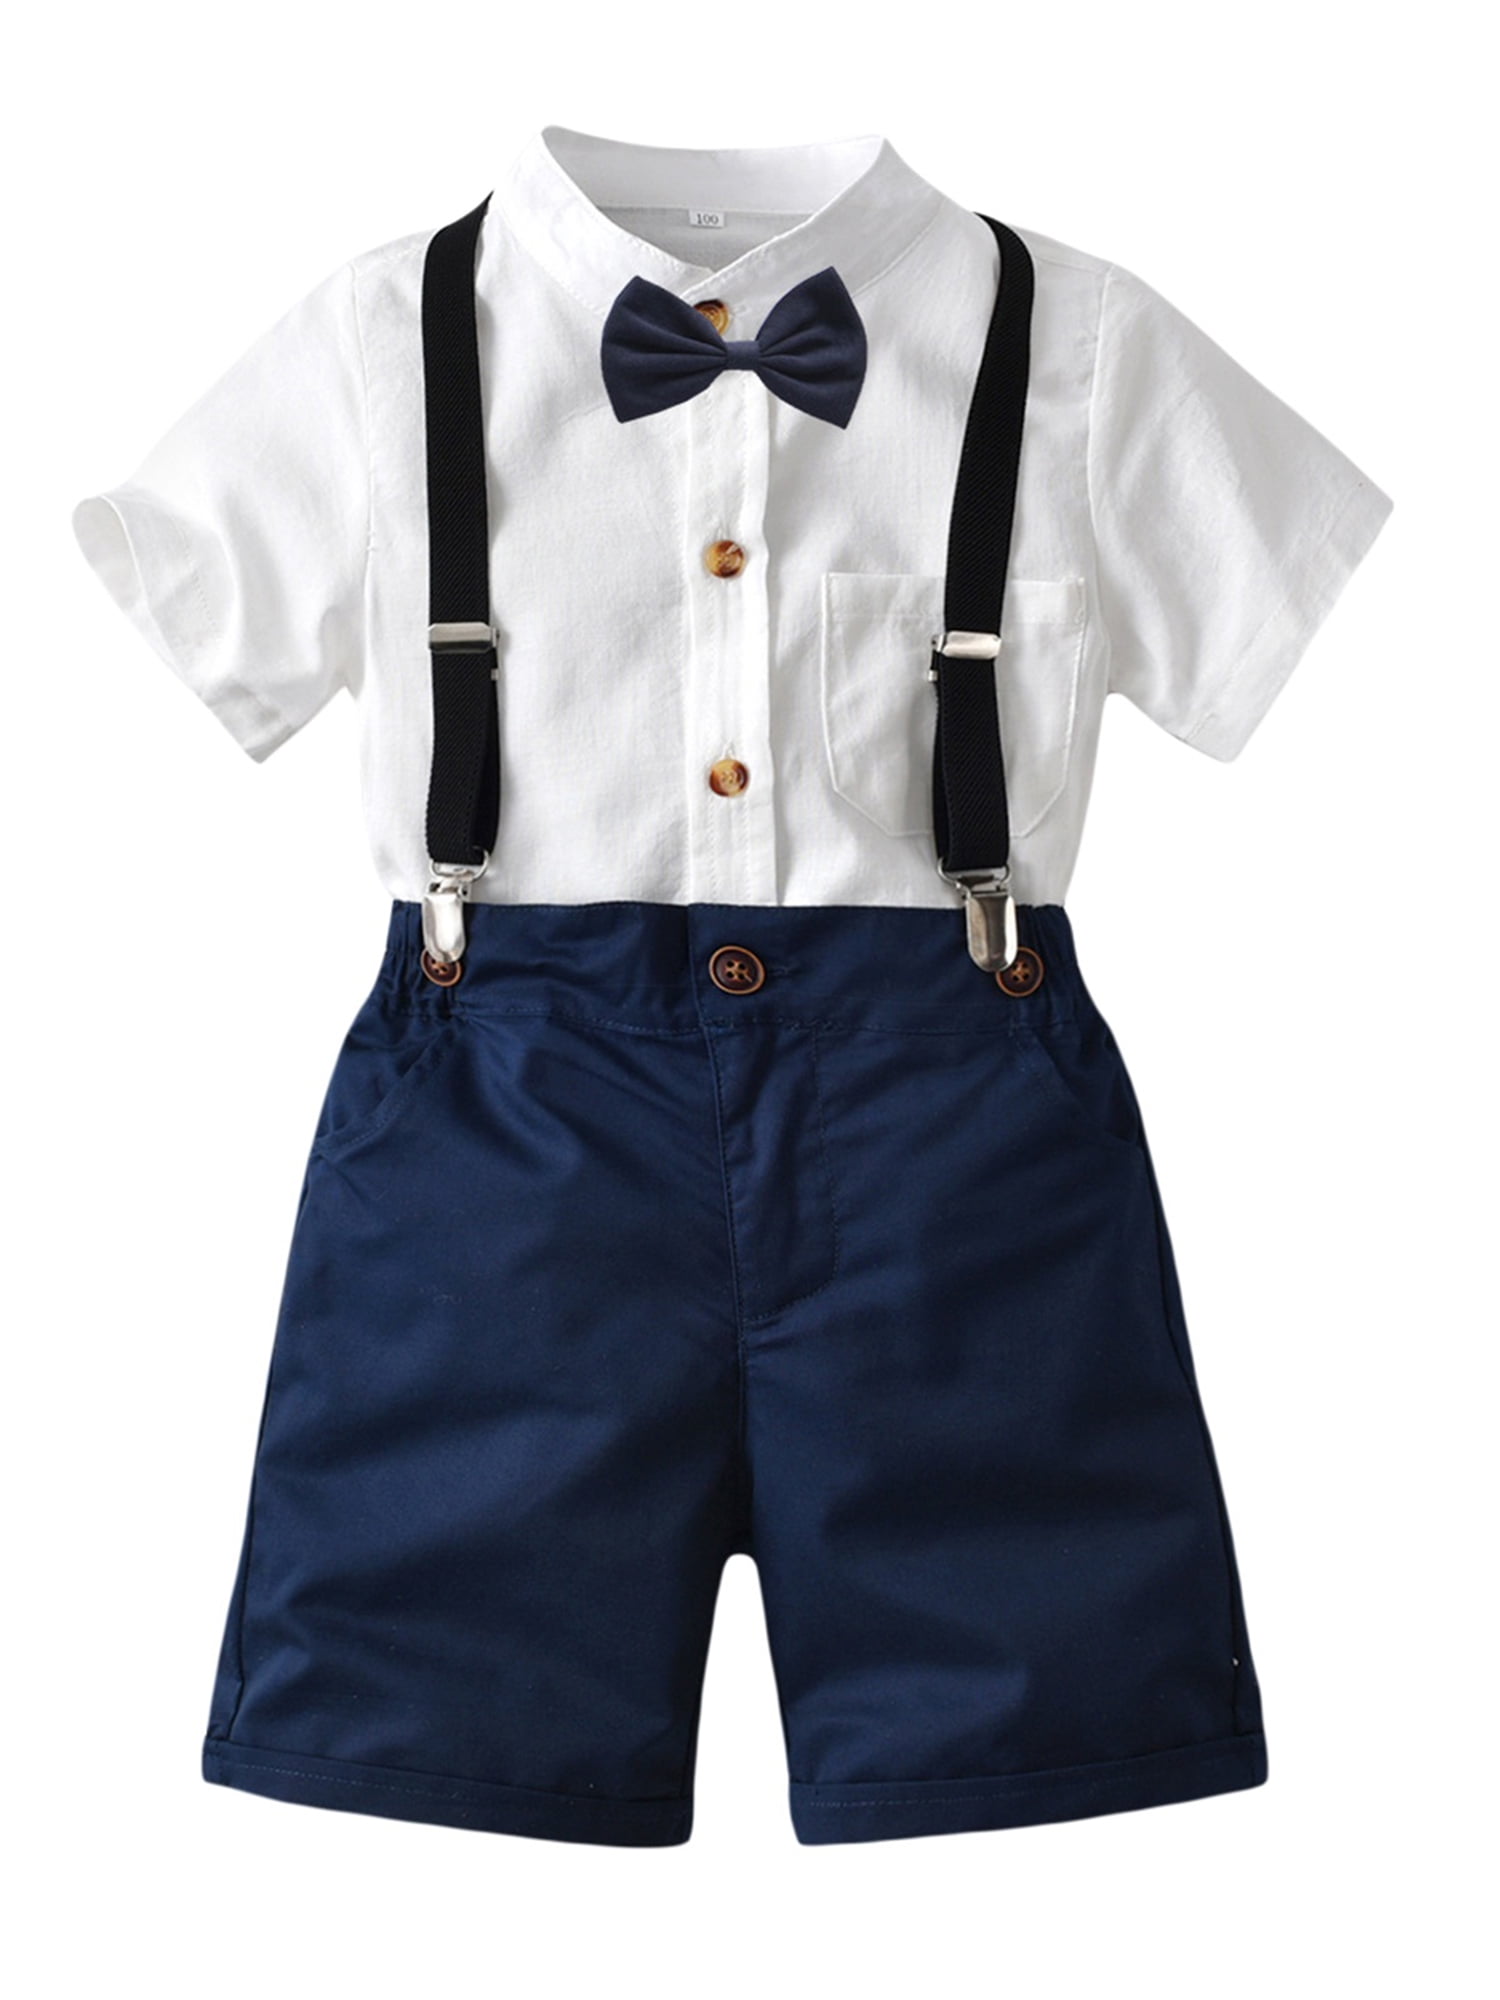 Kids Baby Boys Summer Gentleman Bowtie Short Sleeve Shirt+Suspenders Shorts Suit 